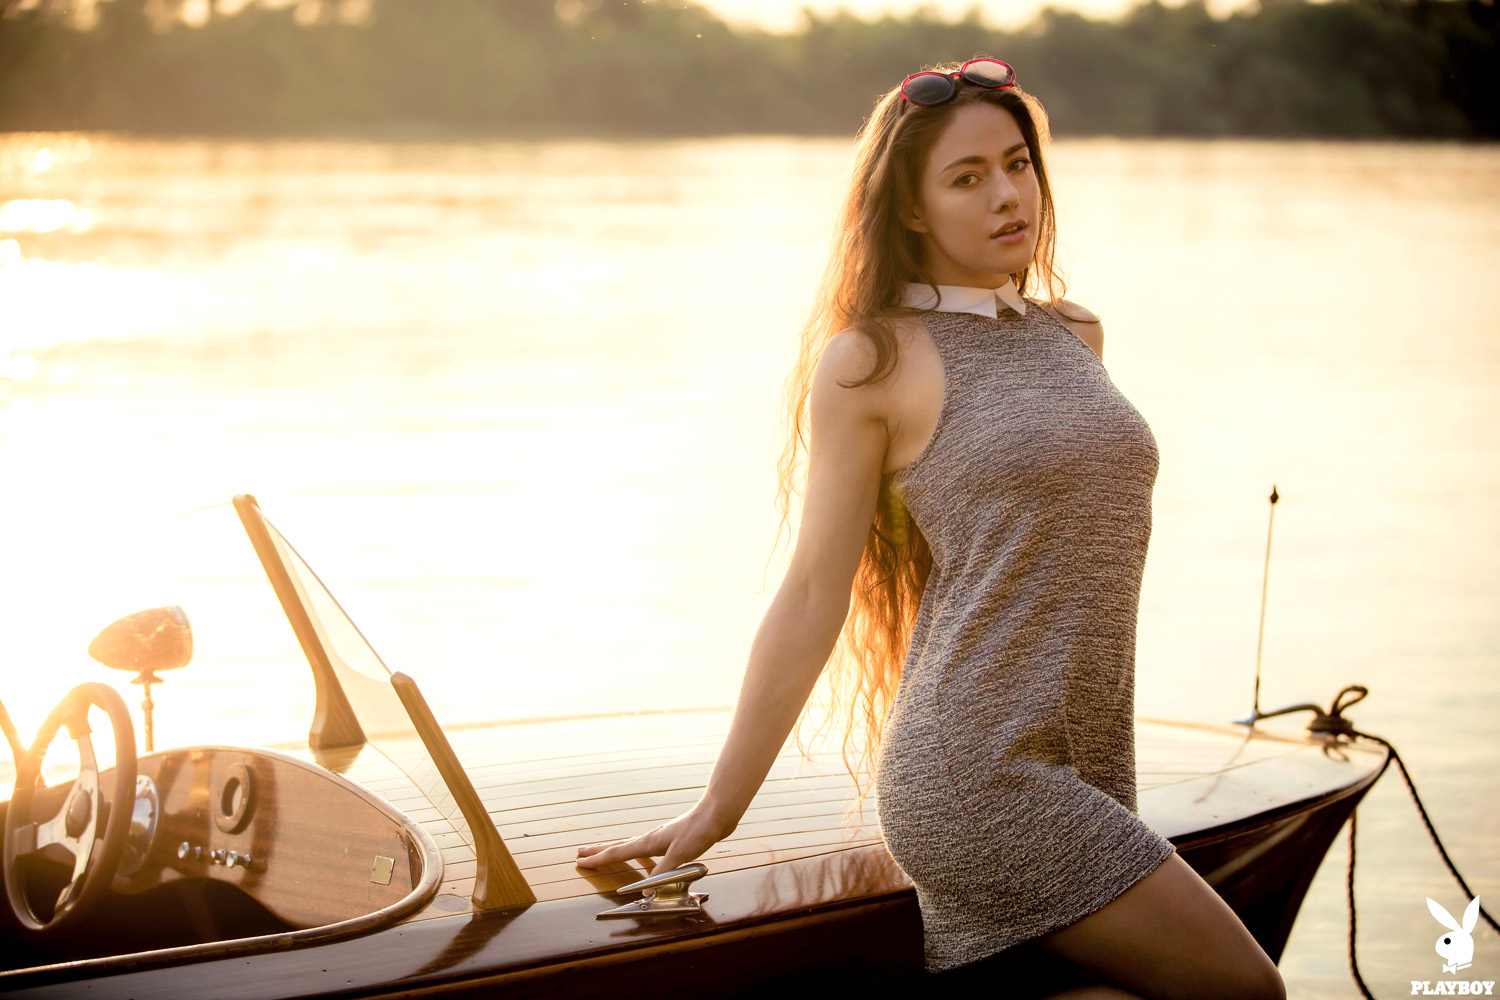 Joy Draiki unveils her stunning all-natural figure on a small speedboat